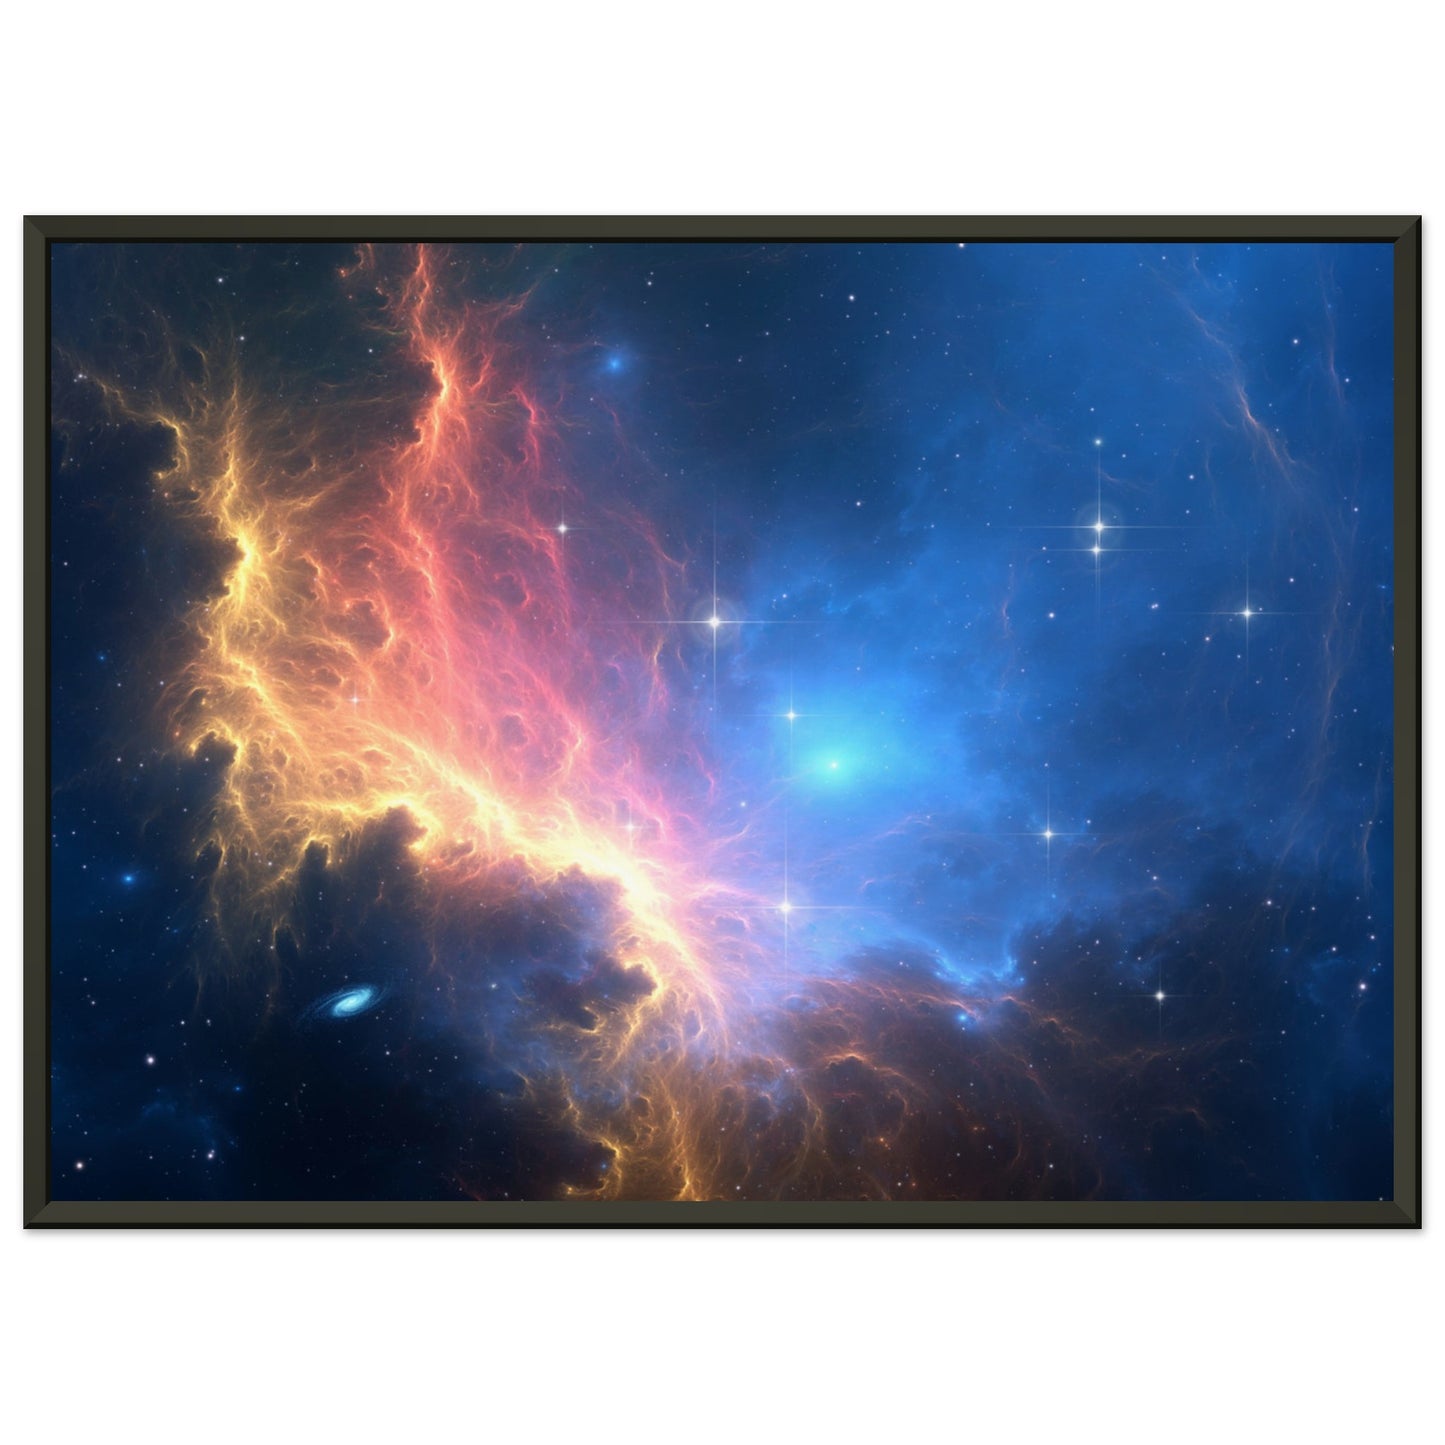 Glowing Nebula with young stars